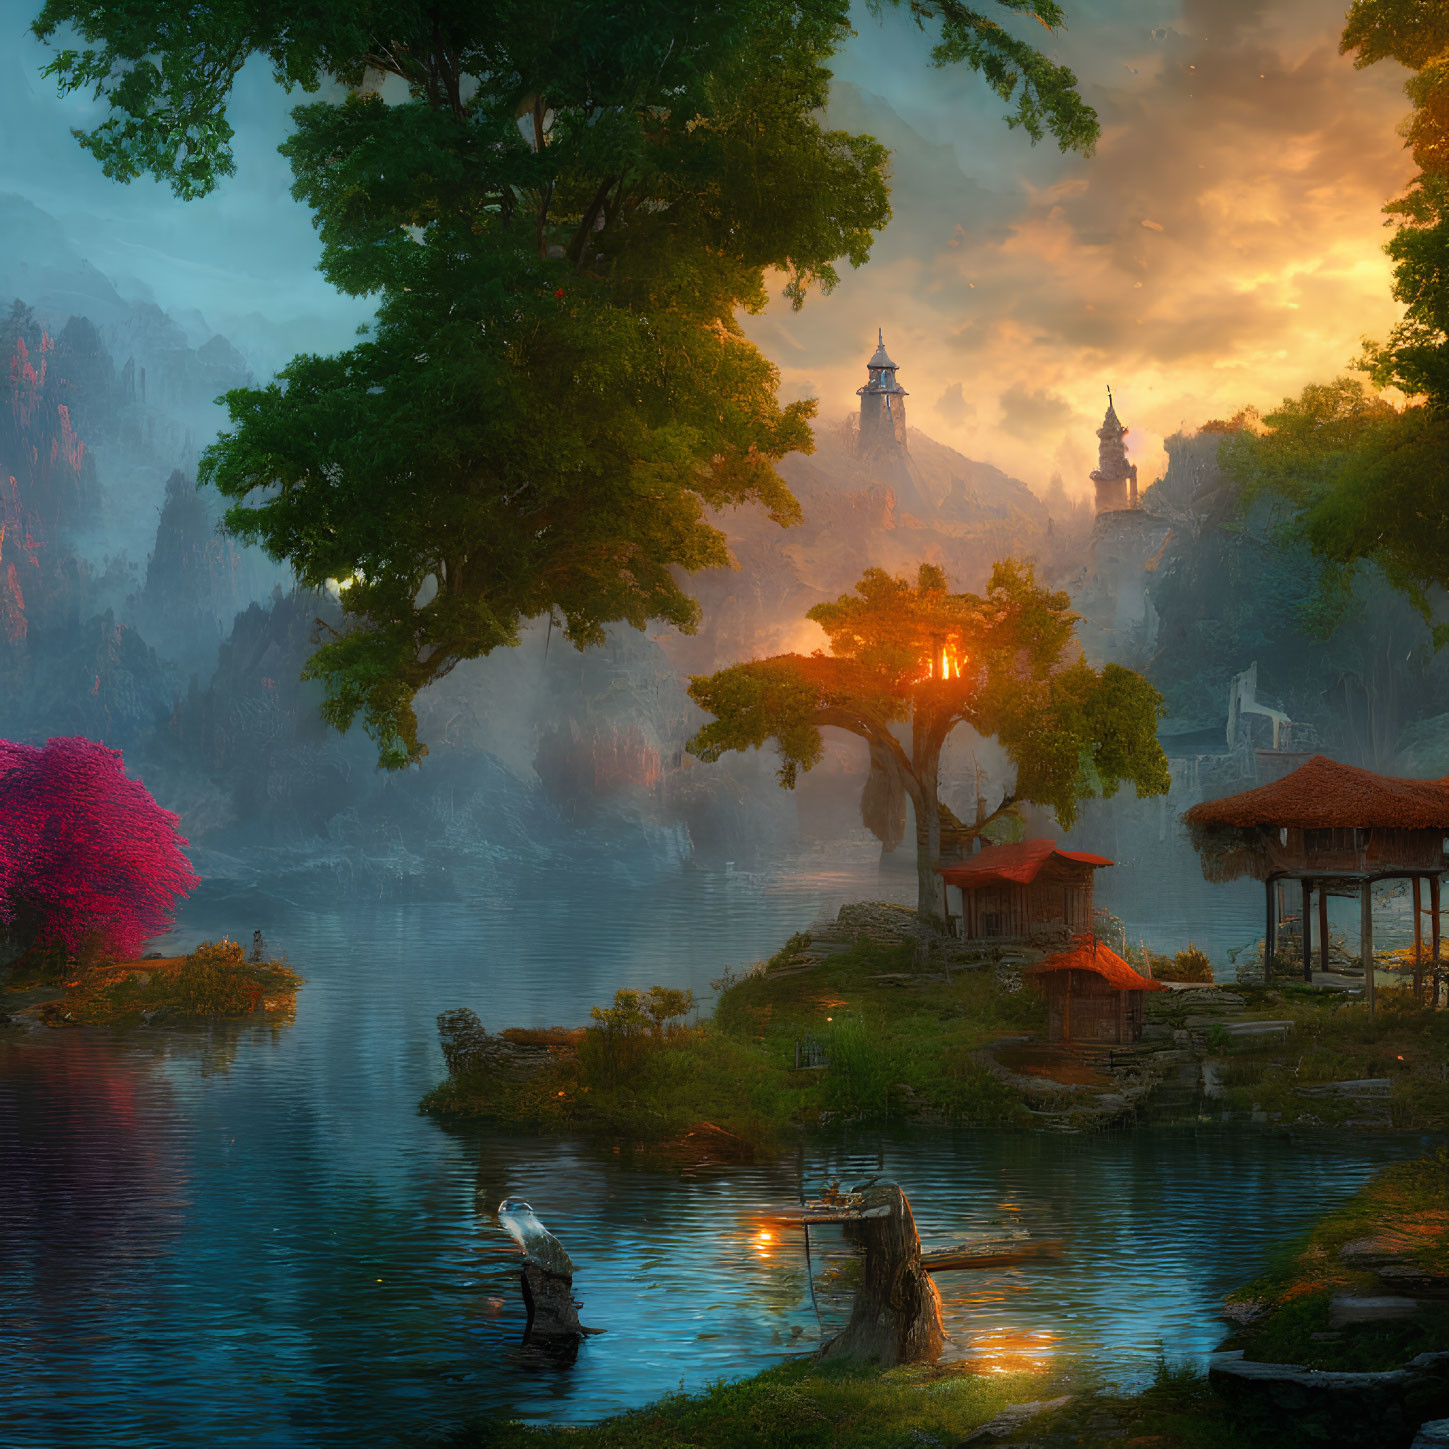 Serene fantasy landscape with idyllic lake, pavilions, blossoming trees, lanterns